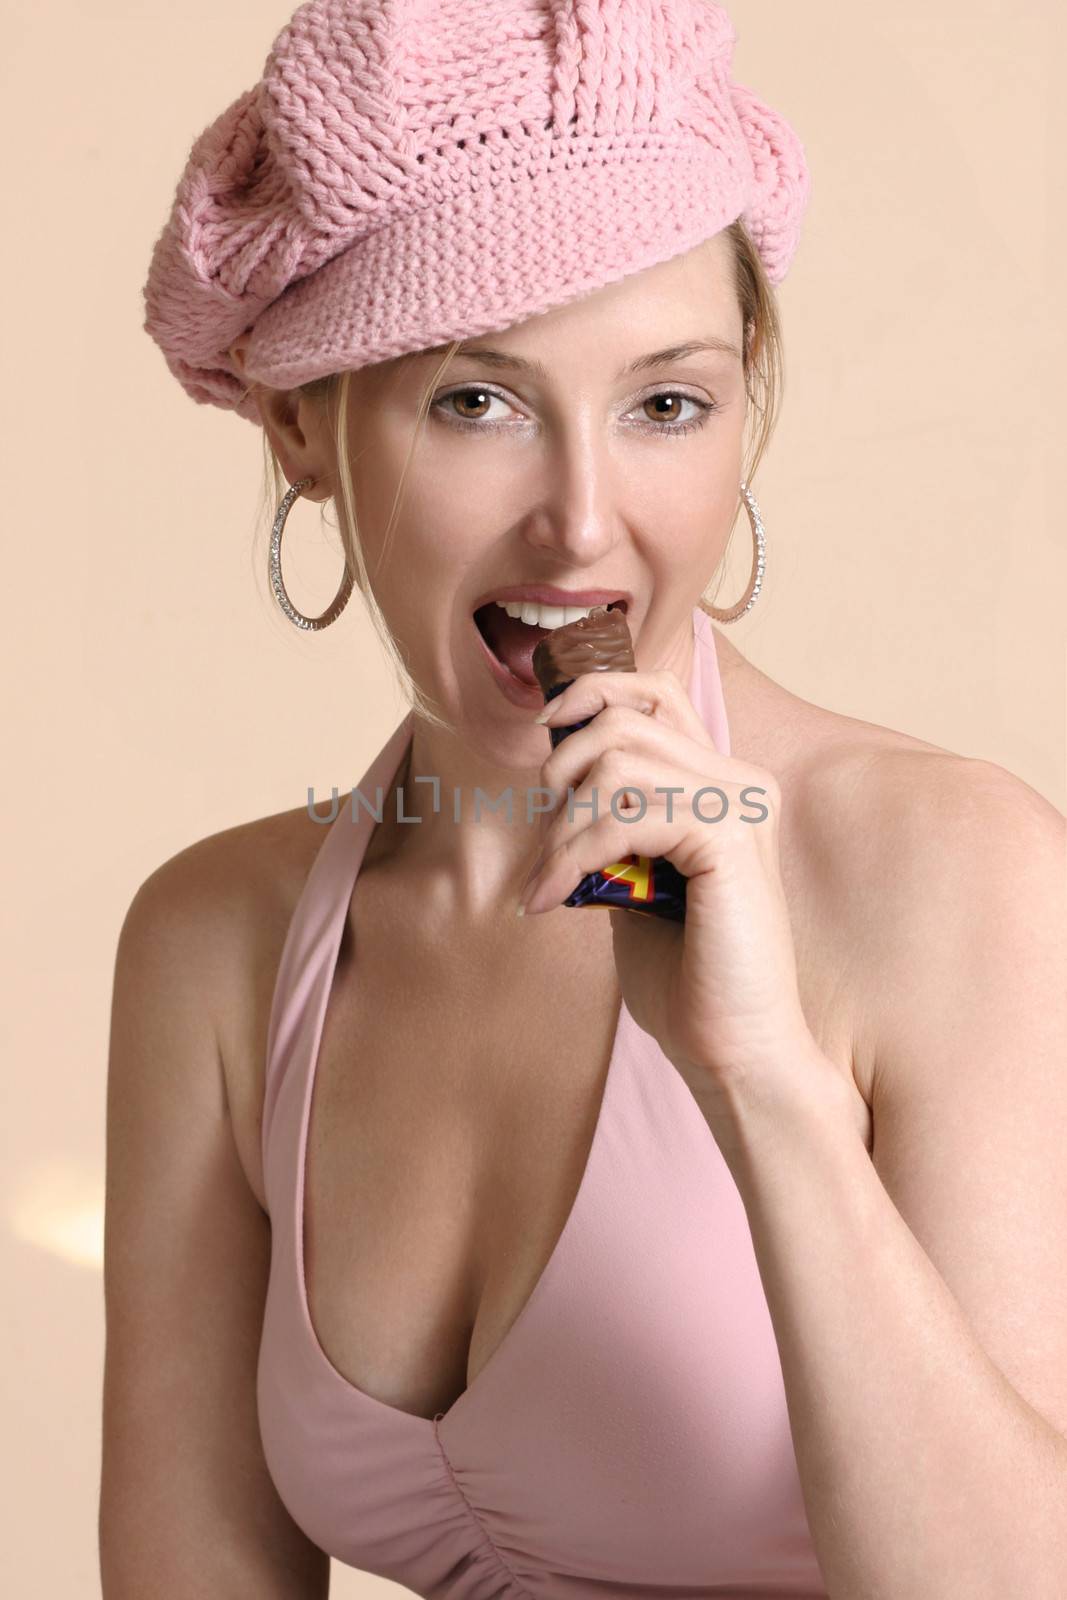 Woman eating a tasty chocolate bar by lovleah